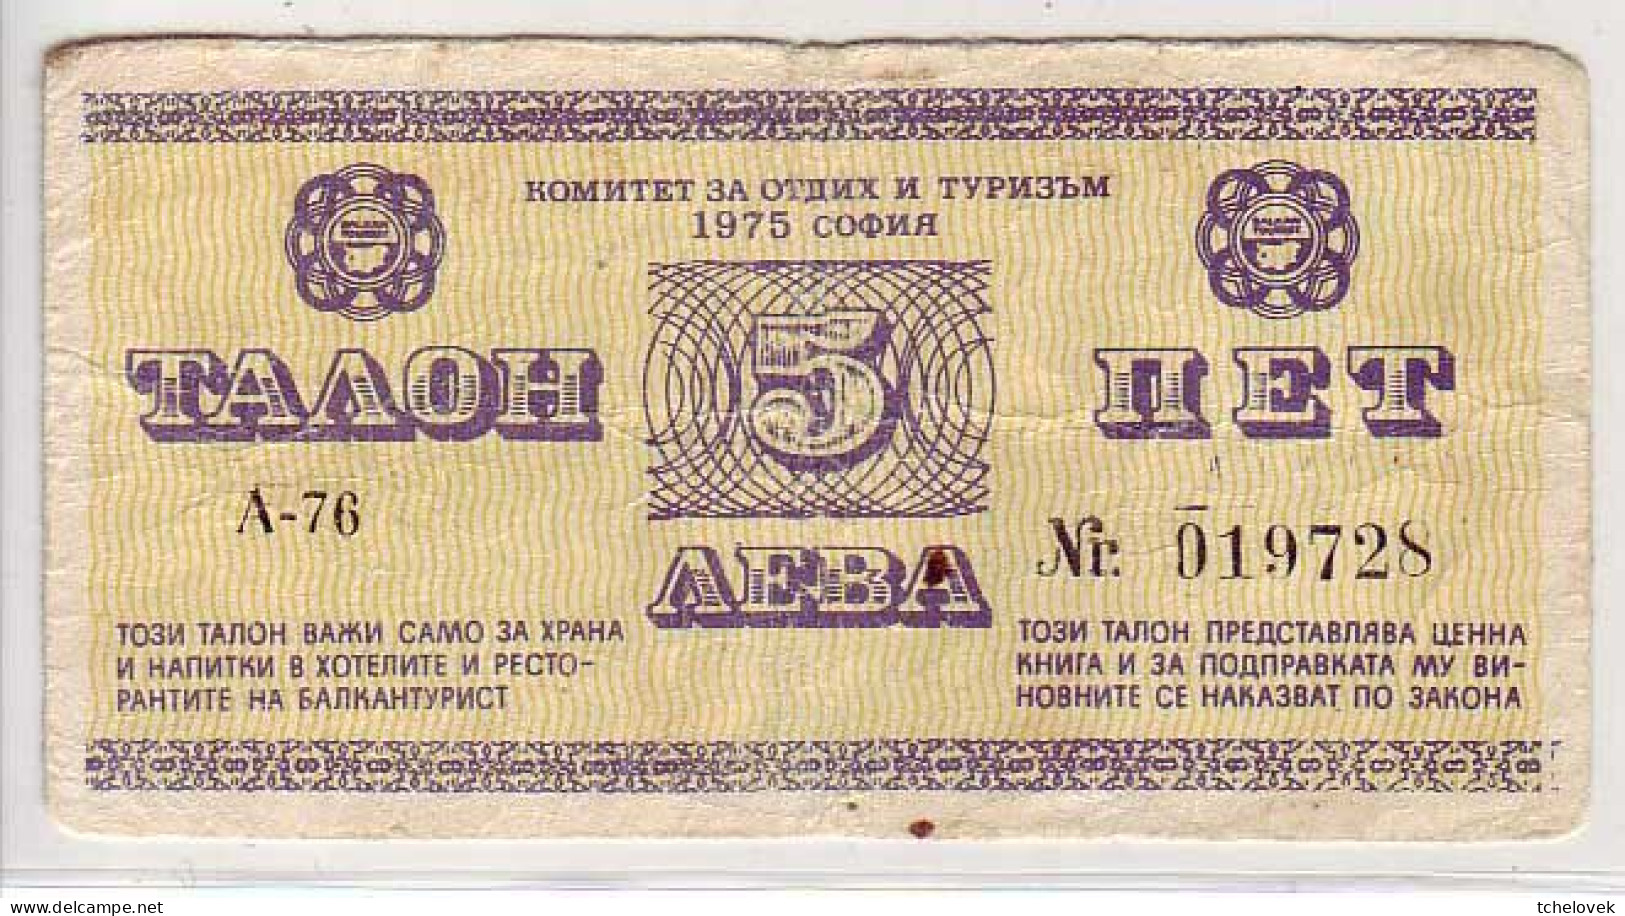 (Billets). Bulgarie Bulgaria. Foreing Exchange Certificate. Rare. Balkan Tourist. 1975. 5 Leva Serie A-76 N° 019728 - Bulgarien